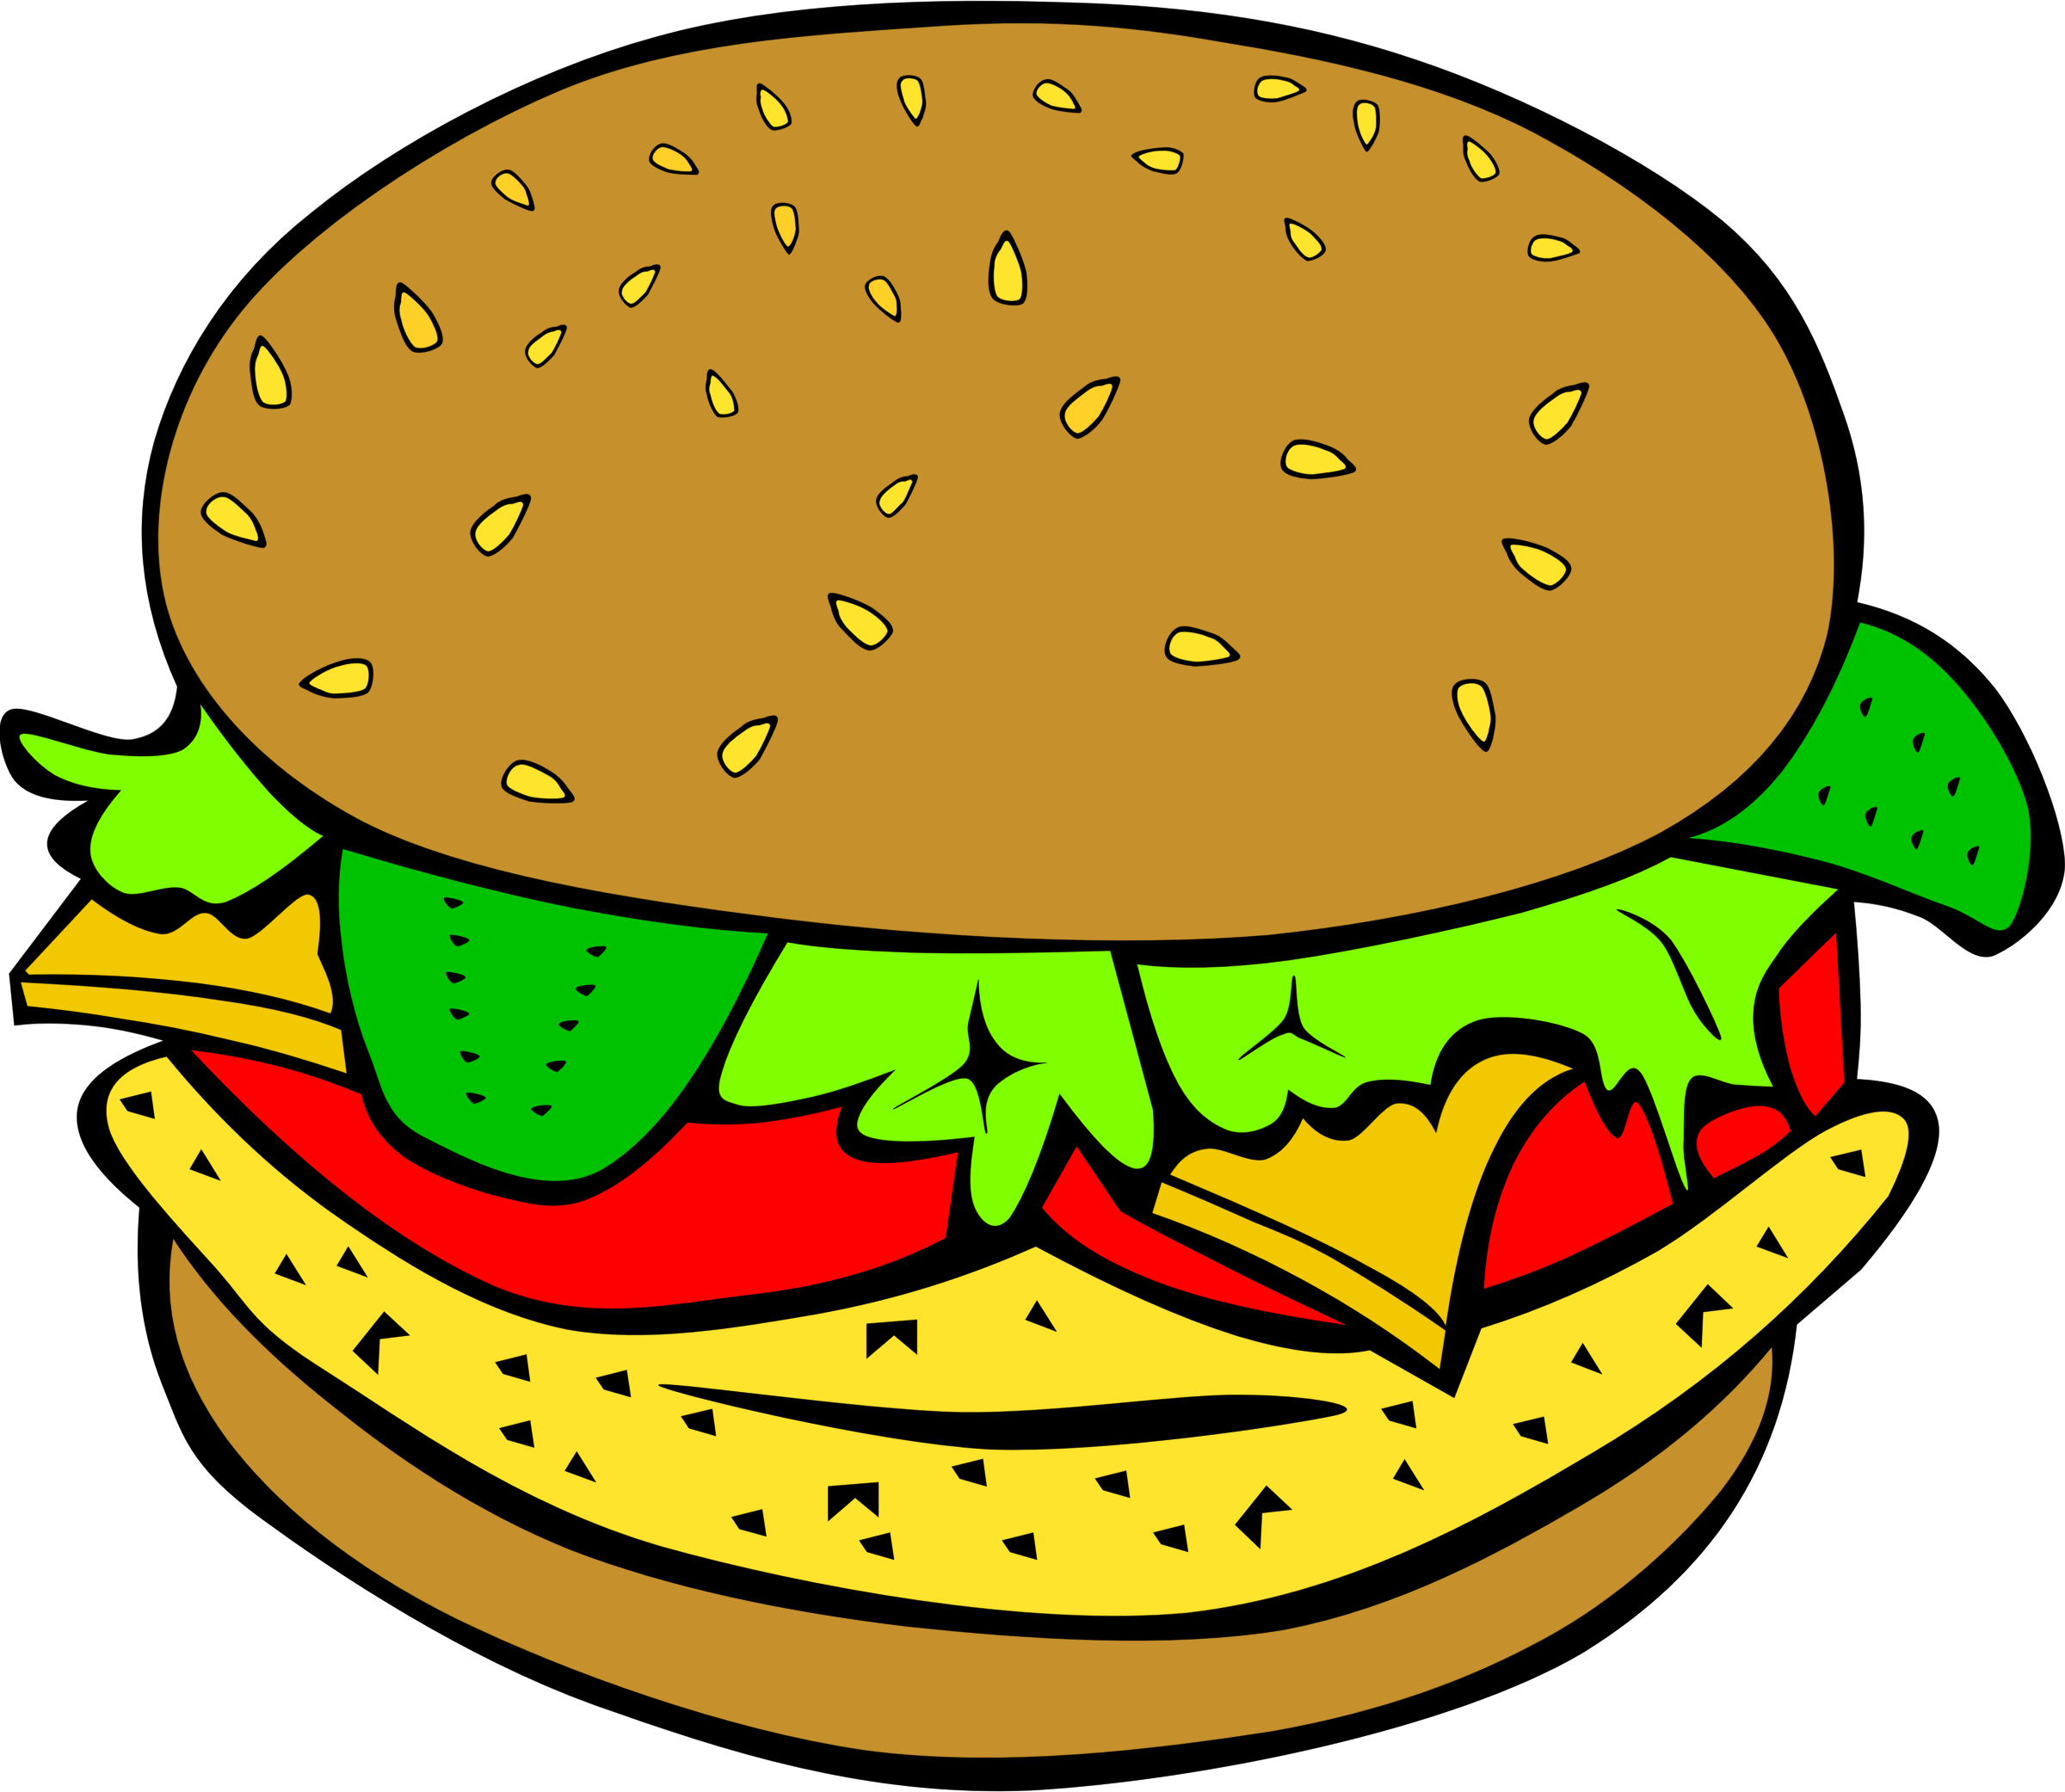 Fast Food Lunch Dinner Chicken Burger By Gerald G